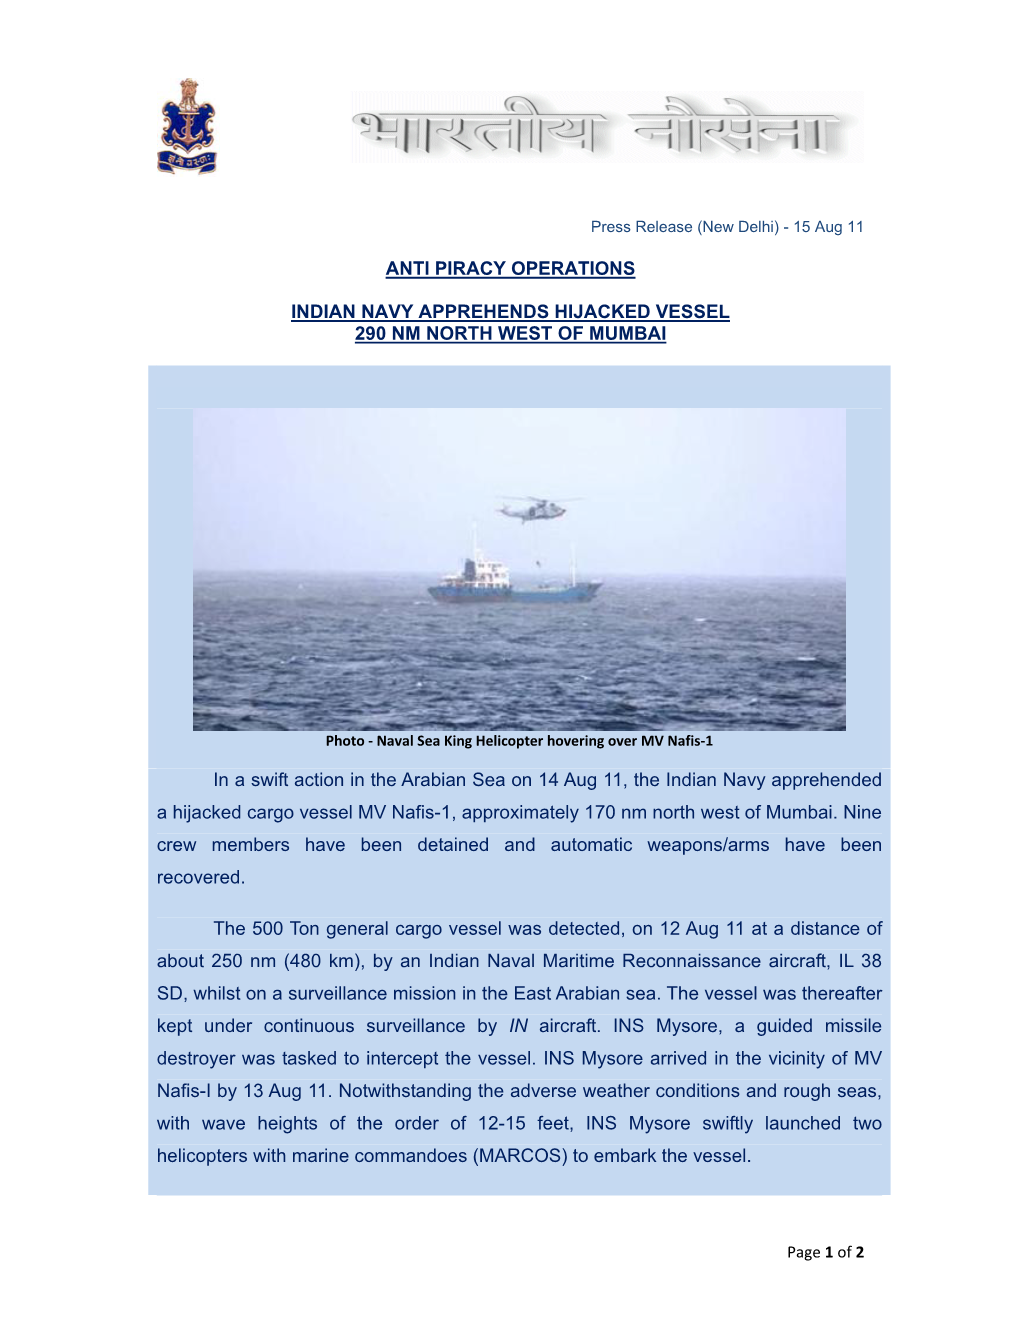 Anti Piracy Operations Indian Navy Apprehends Hijacked